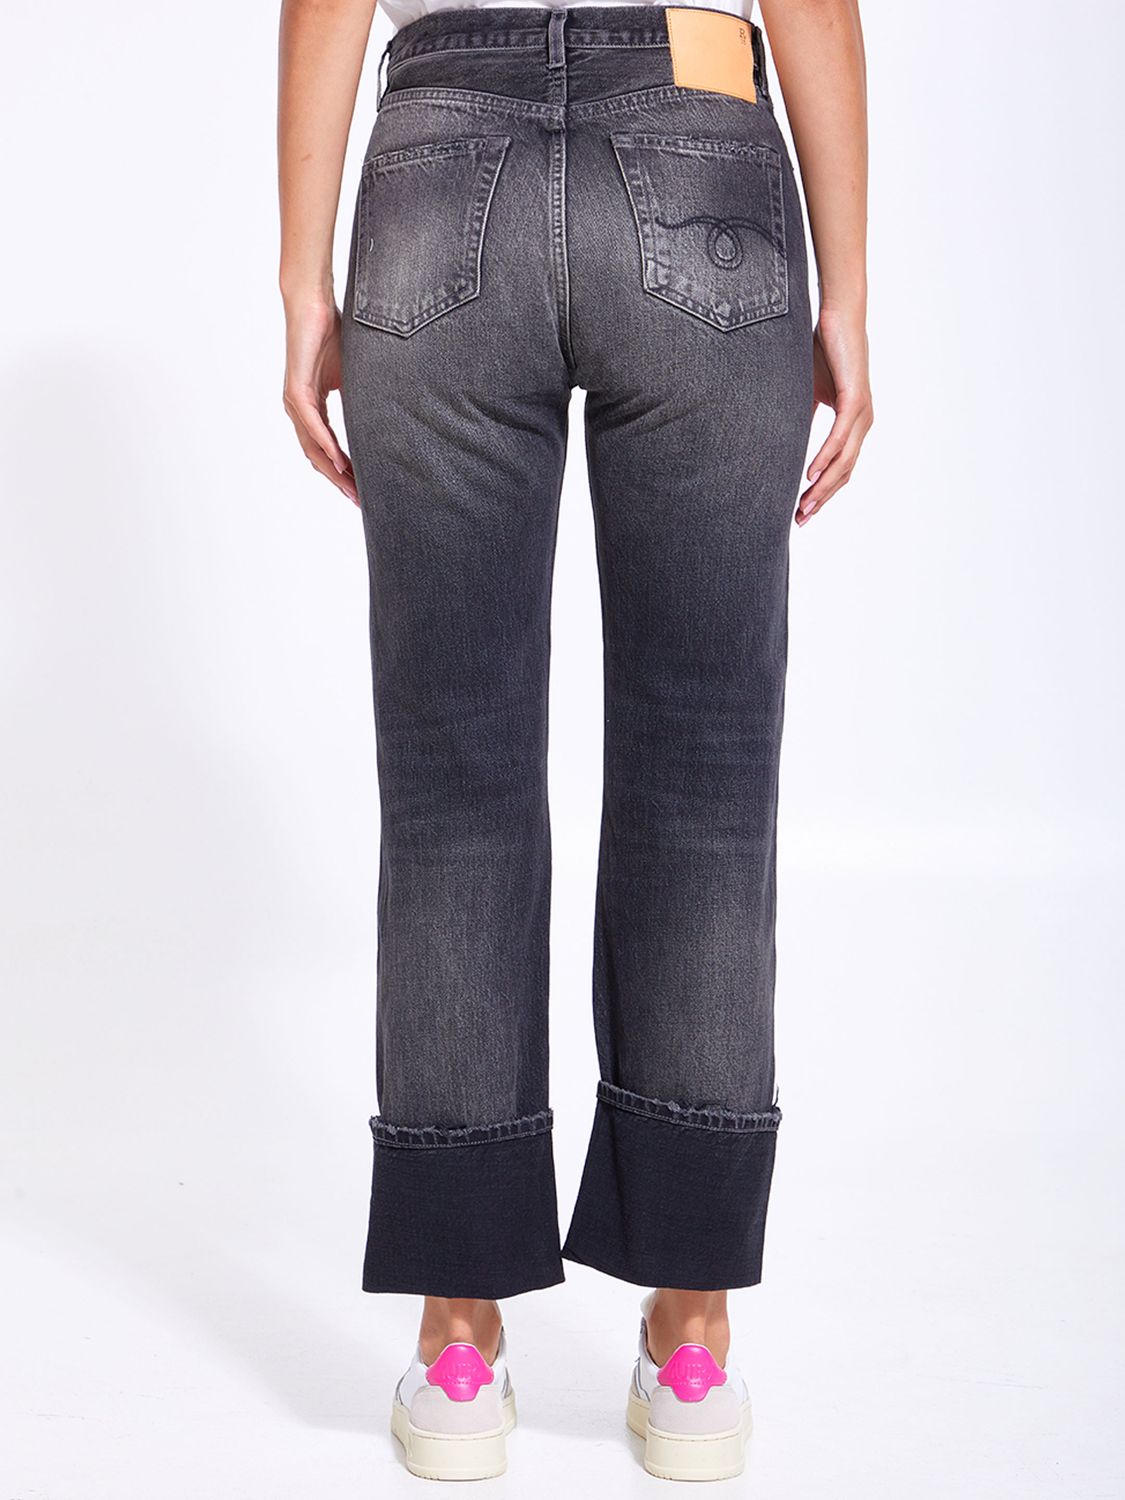 R13 Washed-Out Effect Black Denim Cuffed Jeans - Slim Fit, EU Sizing